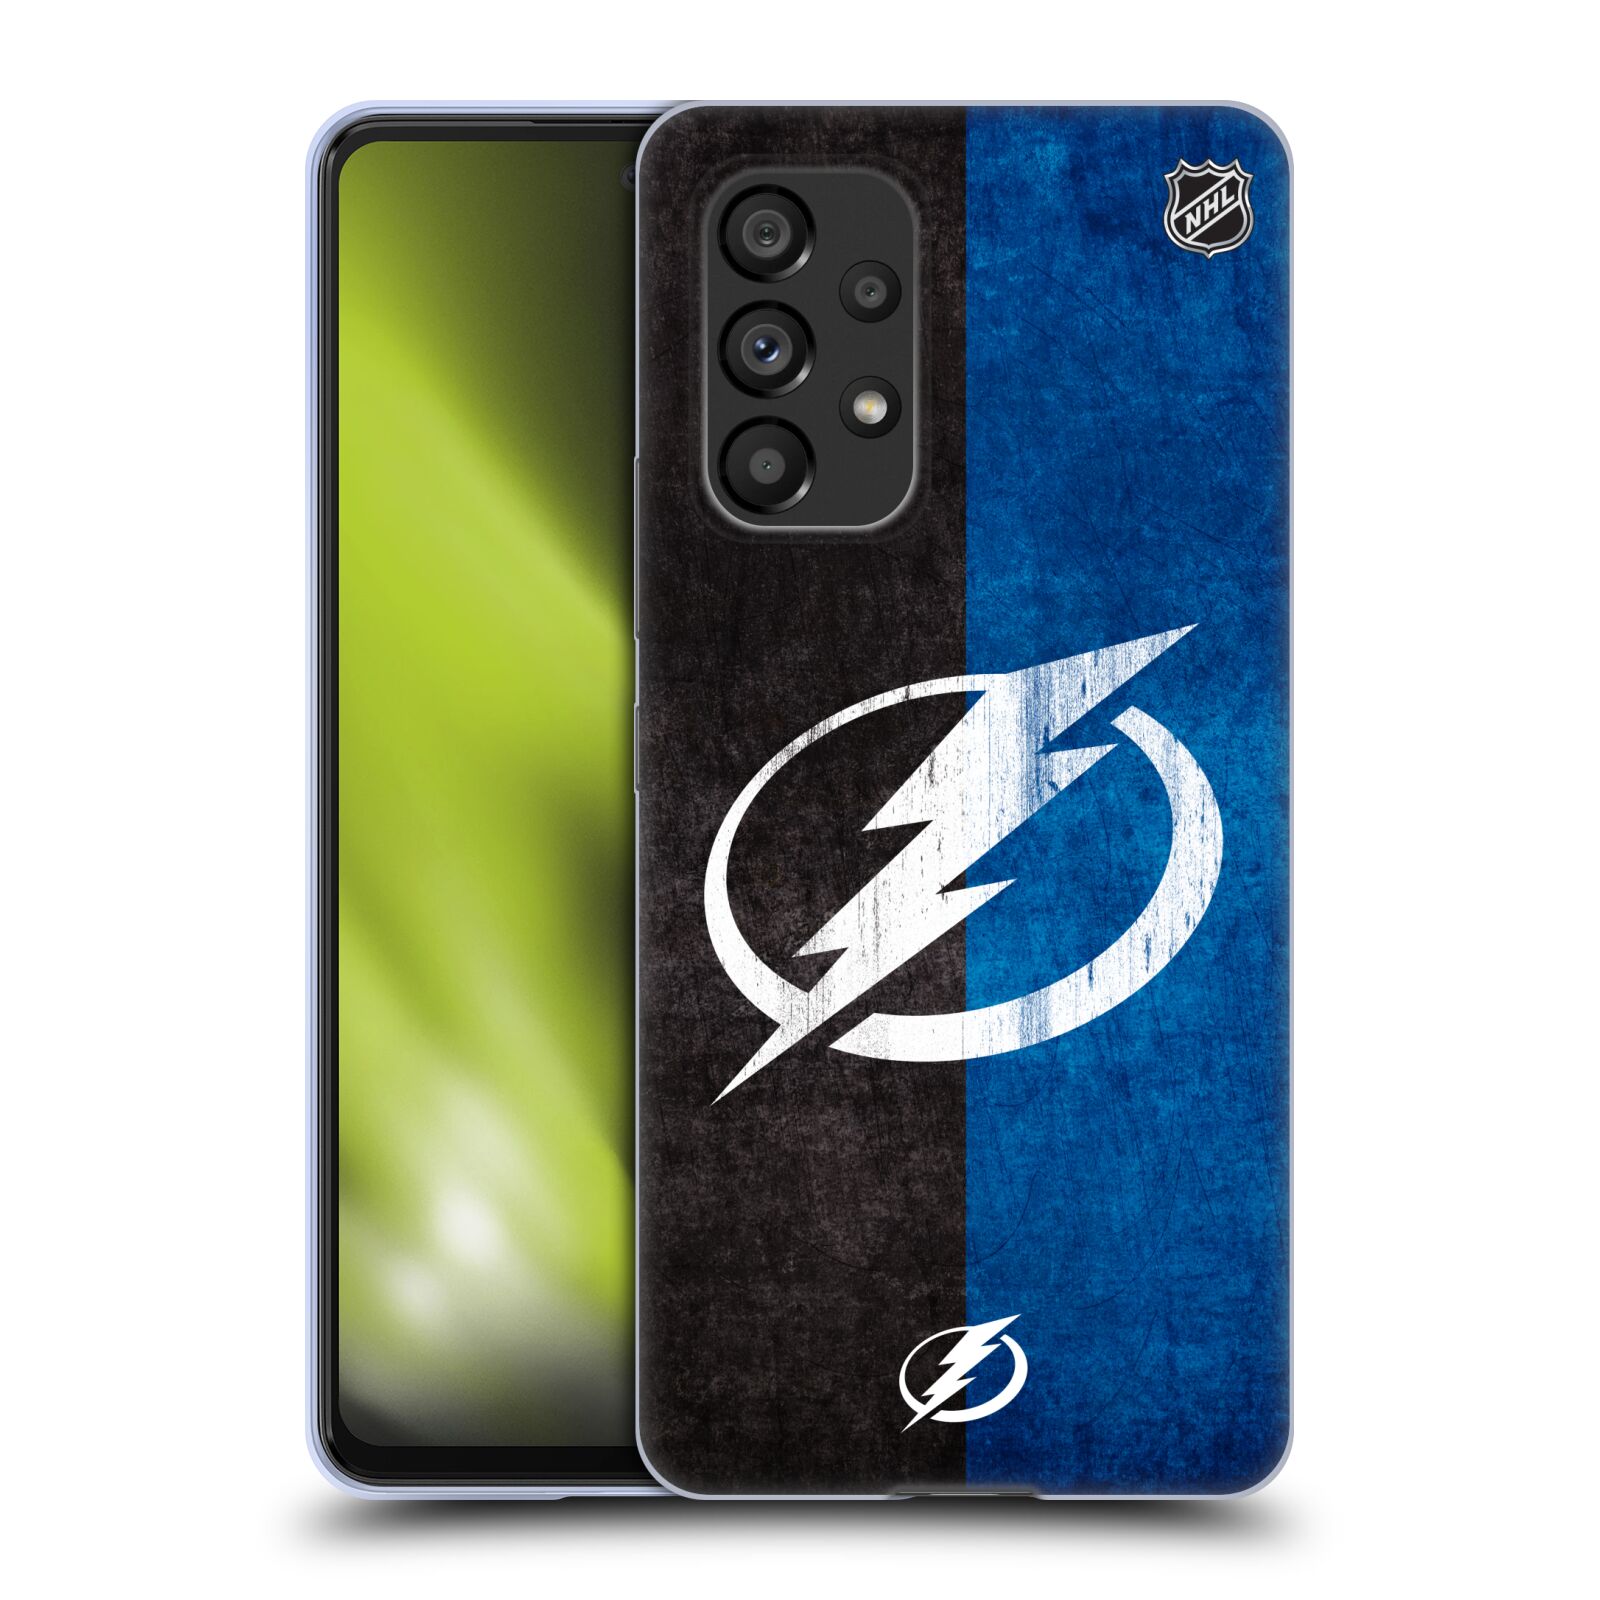 Silikonové pouzdro na mobil Samsung Galaxy A53 5G - NHL - Půlené logo Tampa Bay Lightning (Silikonový kryt, obal, pouzdro na mobilní telefon Samsung Galaxy A53 5G s licencovaným motivem NHL - Půlené logo Tampa Bay Lightning)